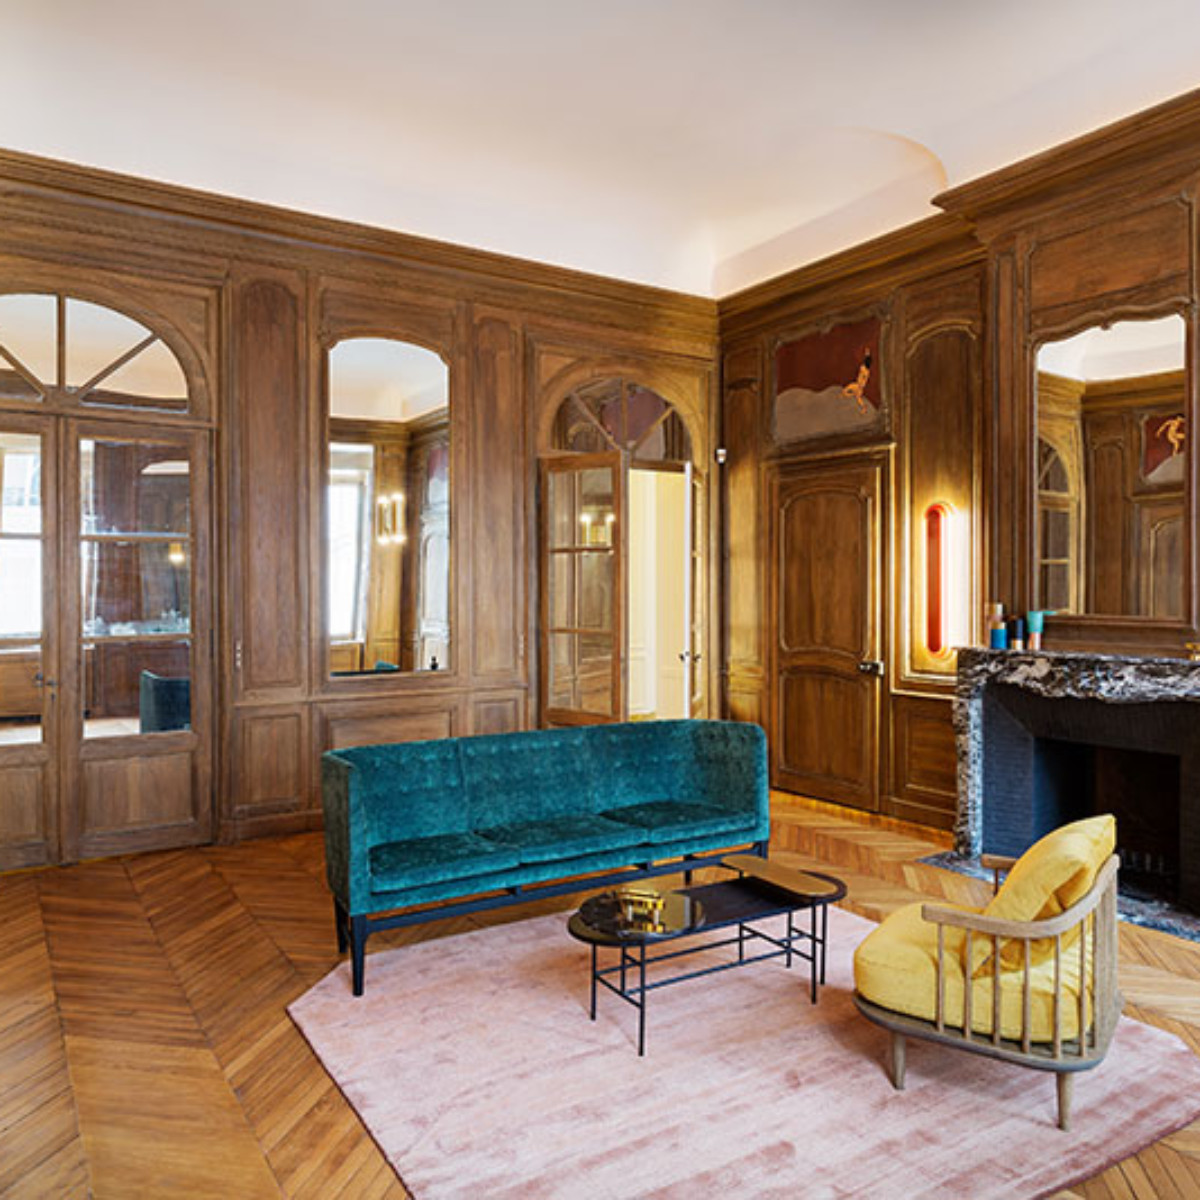 House tour: inside Coco Chanel's historic and art-filled Paris apartment -  Vogue Australia